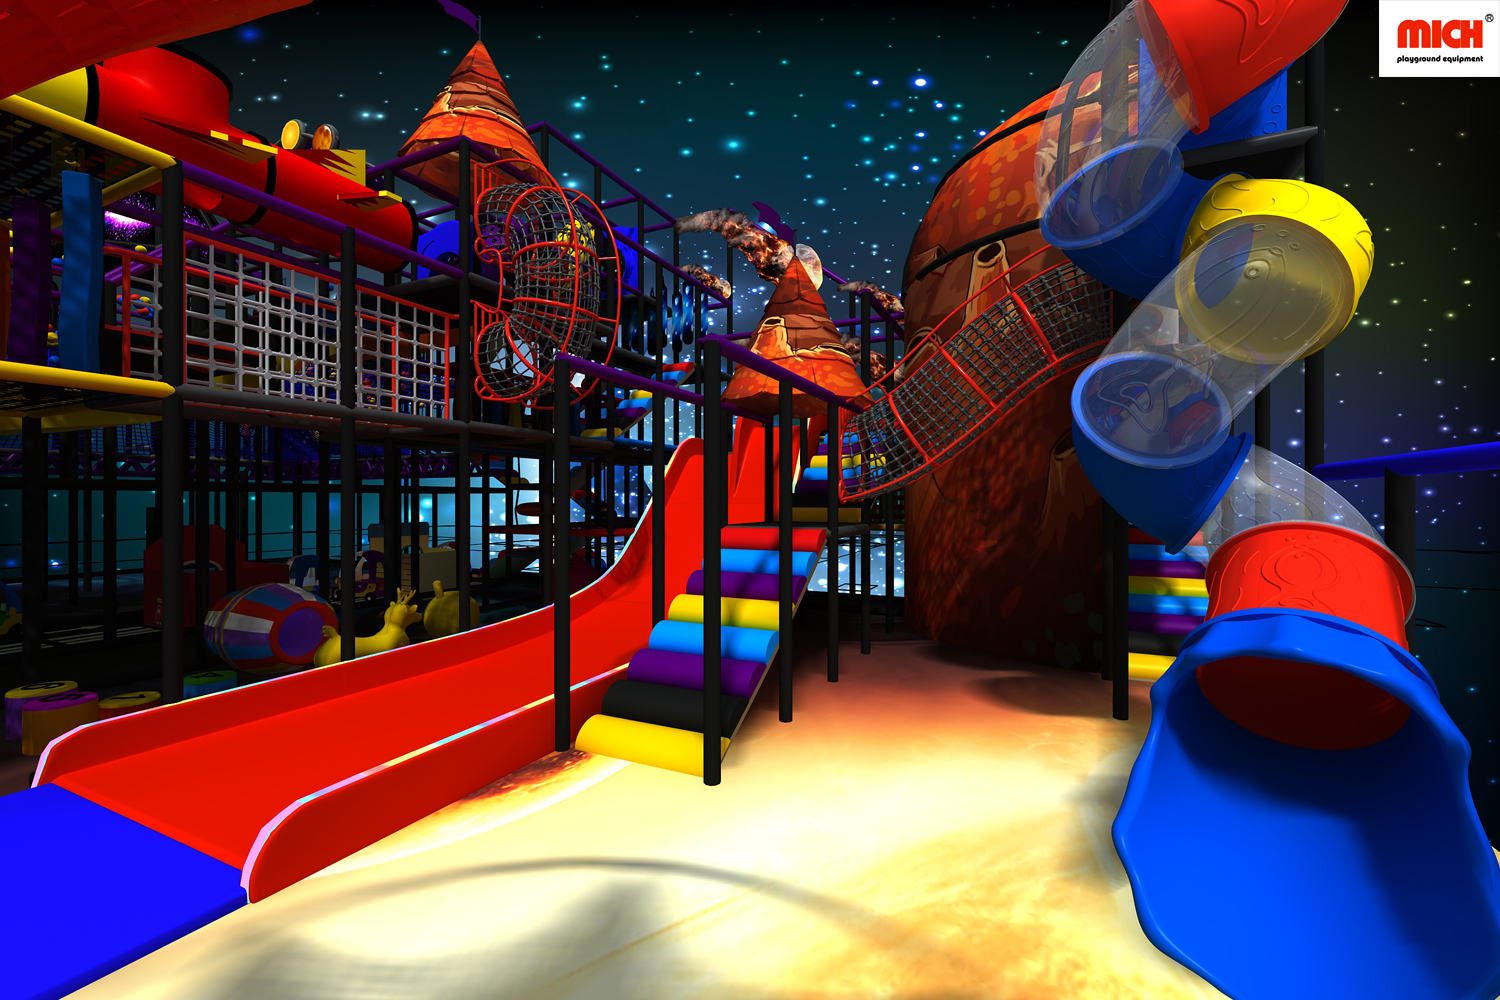 Space bertema 4 level anak -anak playhouse lembut